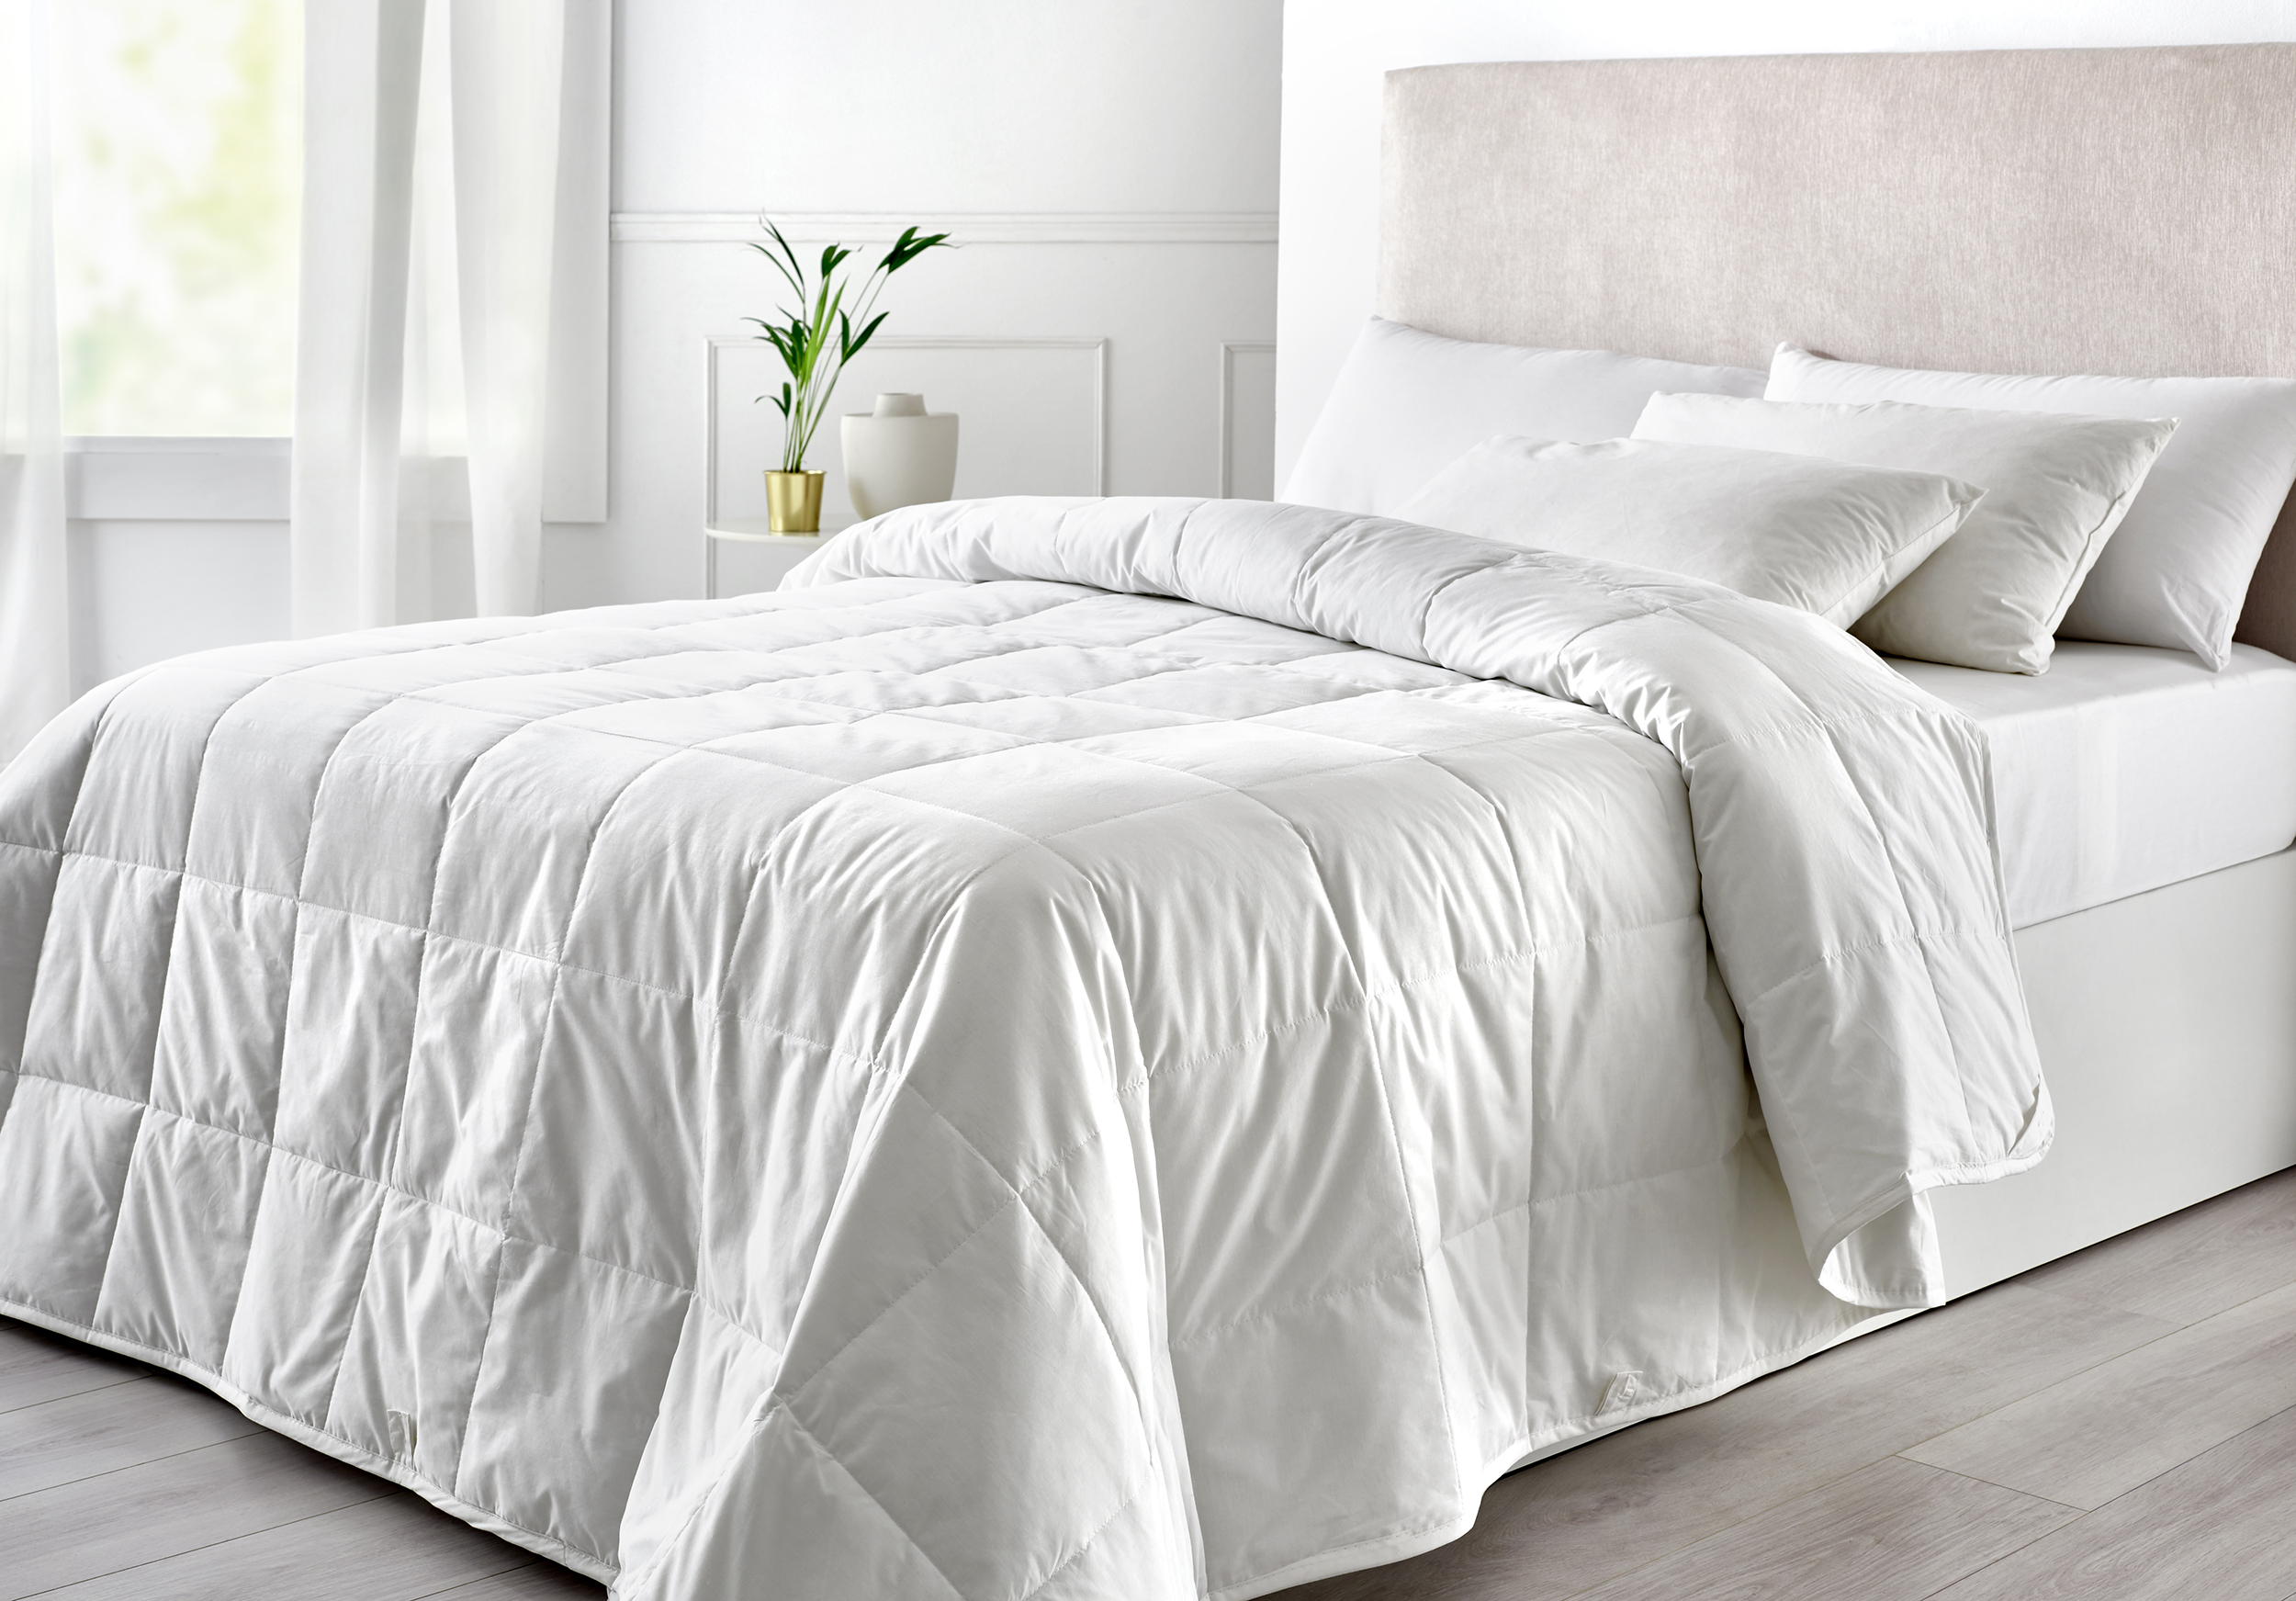 En este momento estás viendo PIKOLIN HOME presenta sus complementos de cama en Home textiles Premium